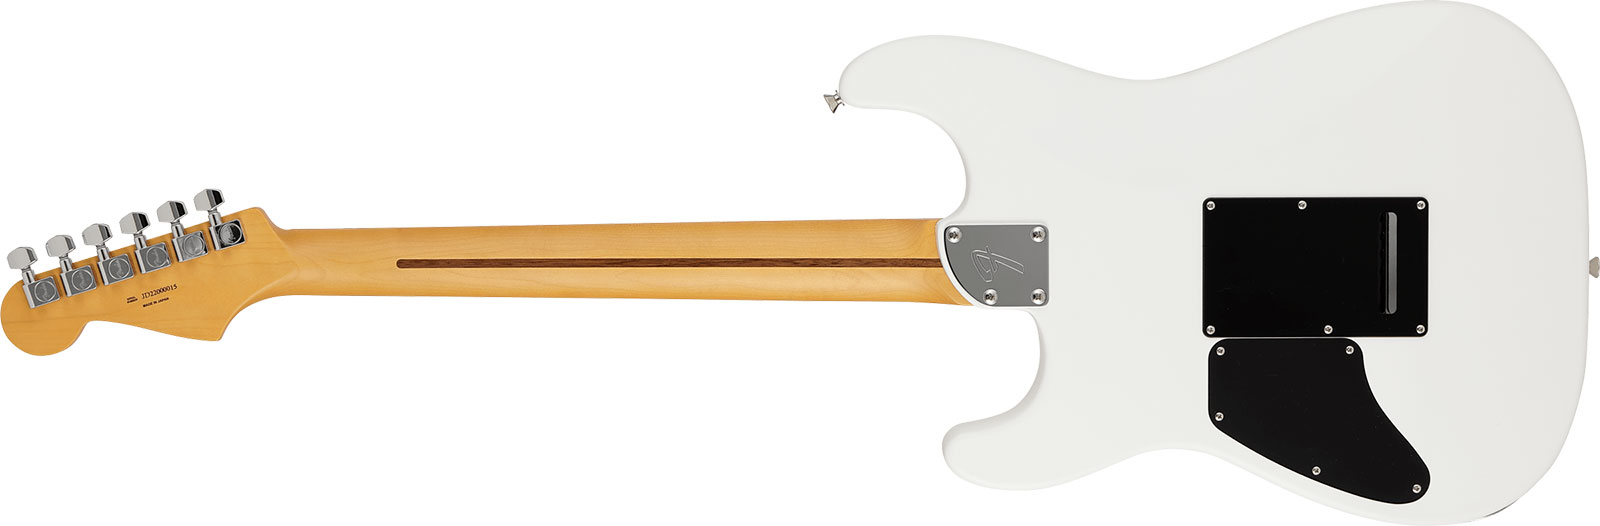 Fender Strat Elemental Mij Jap 2h Trem Rw - Nimbus White - Str shape electric guitar - Variation 1